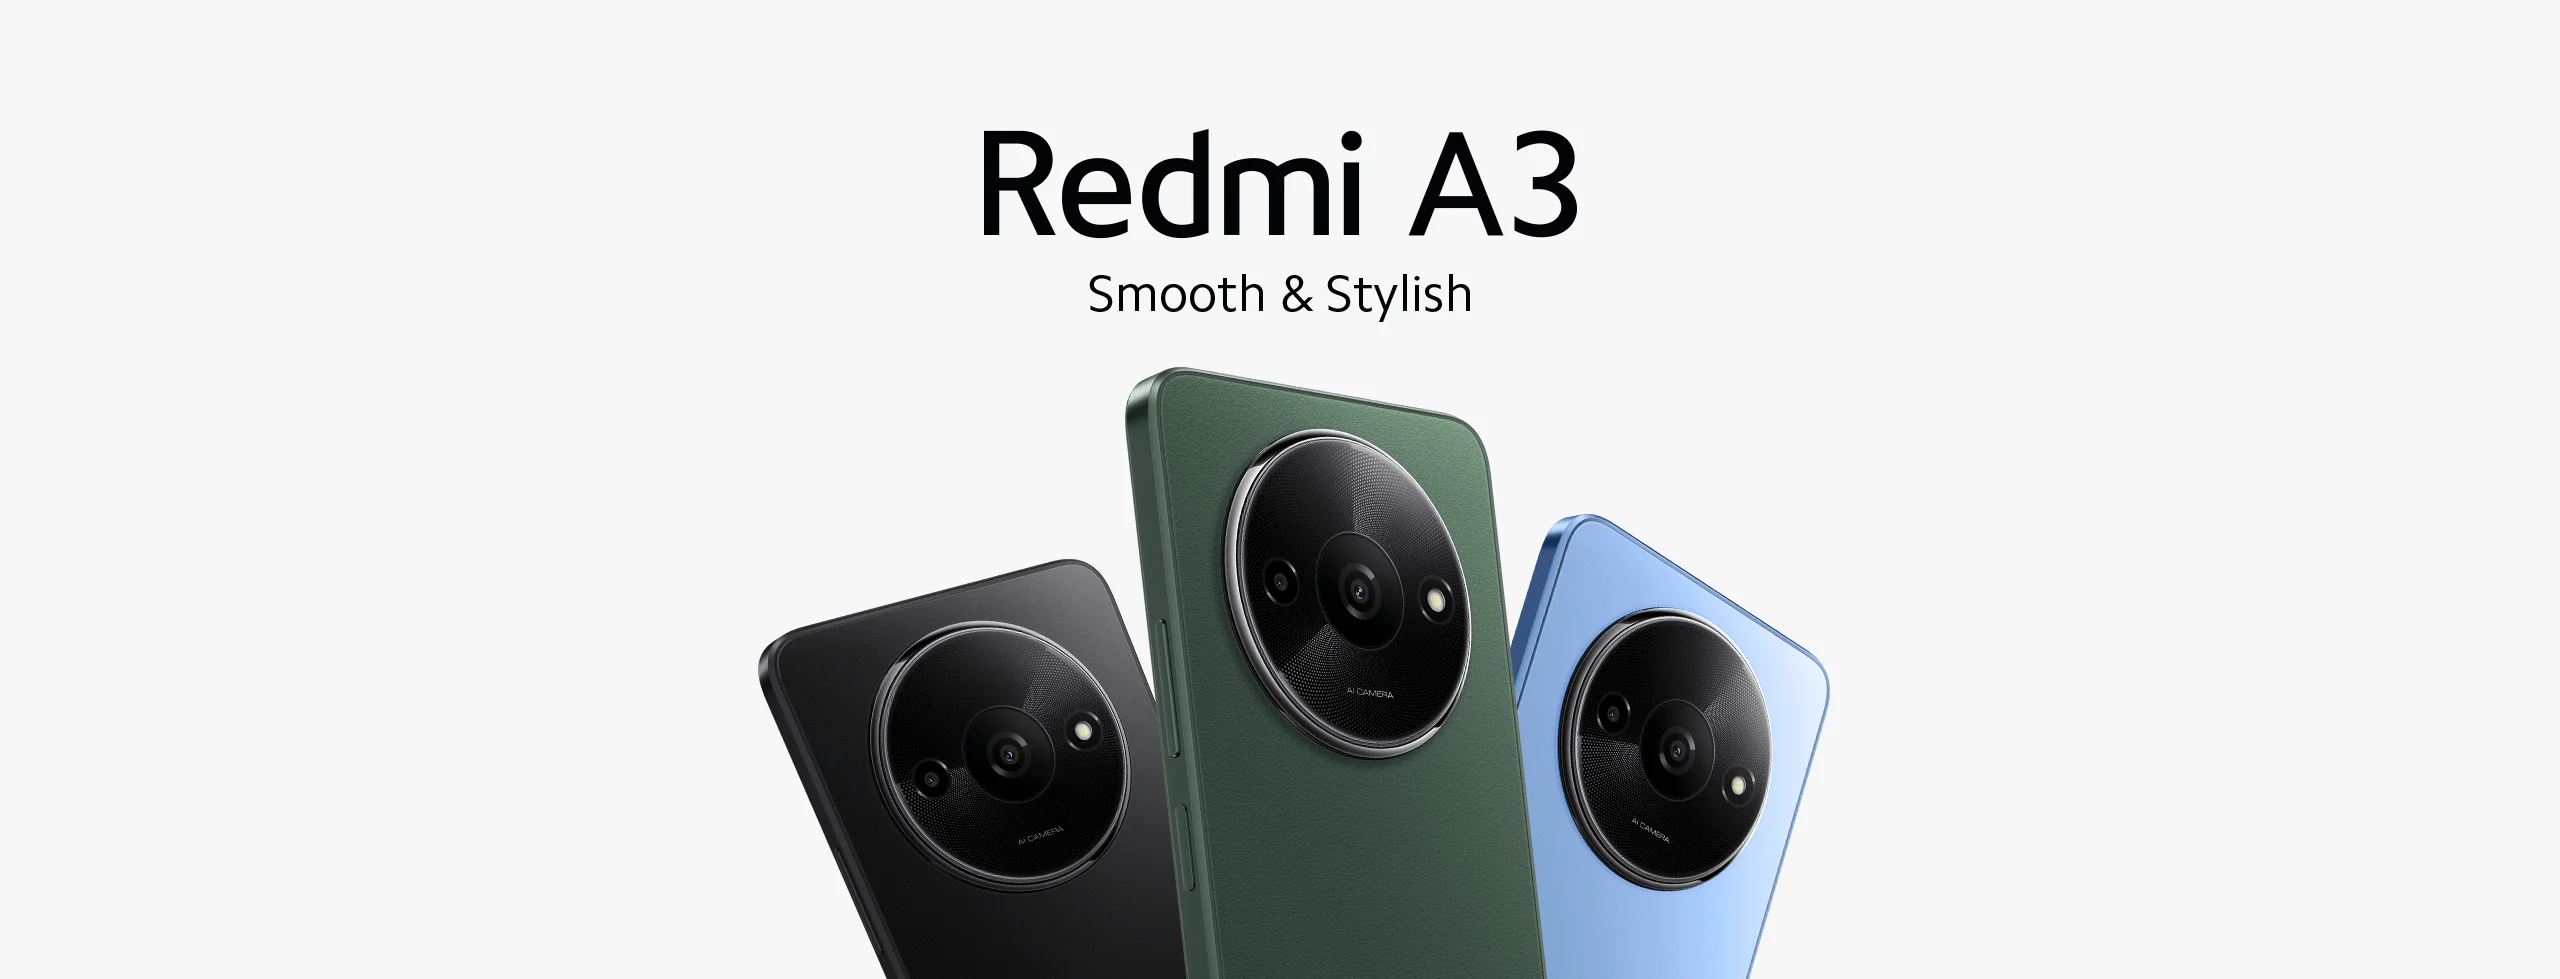 “بنظام تشغيل اندرويد 14 وبتصميم أنيق” .. مواصفات هاتف Xiaomi Redmi A3 |المميزات والعيوب